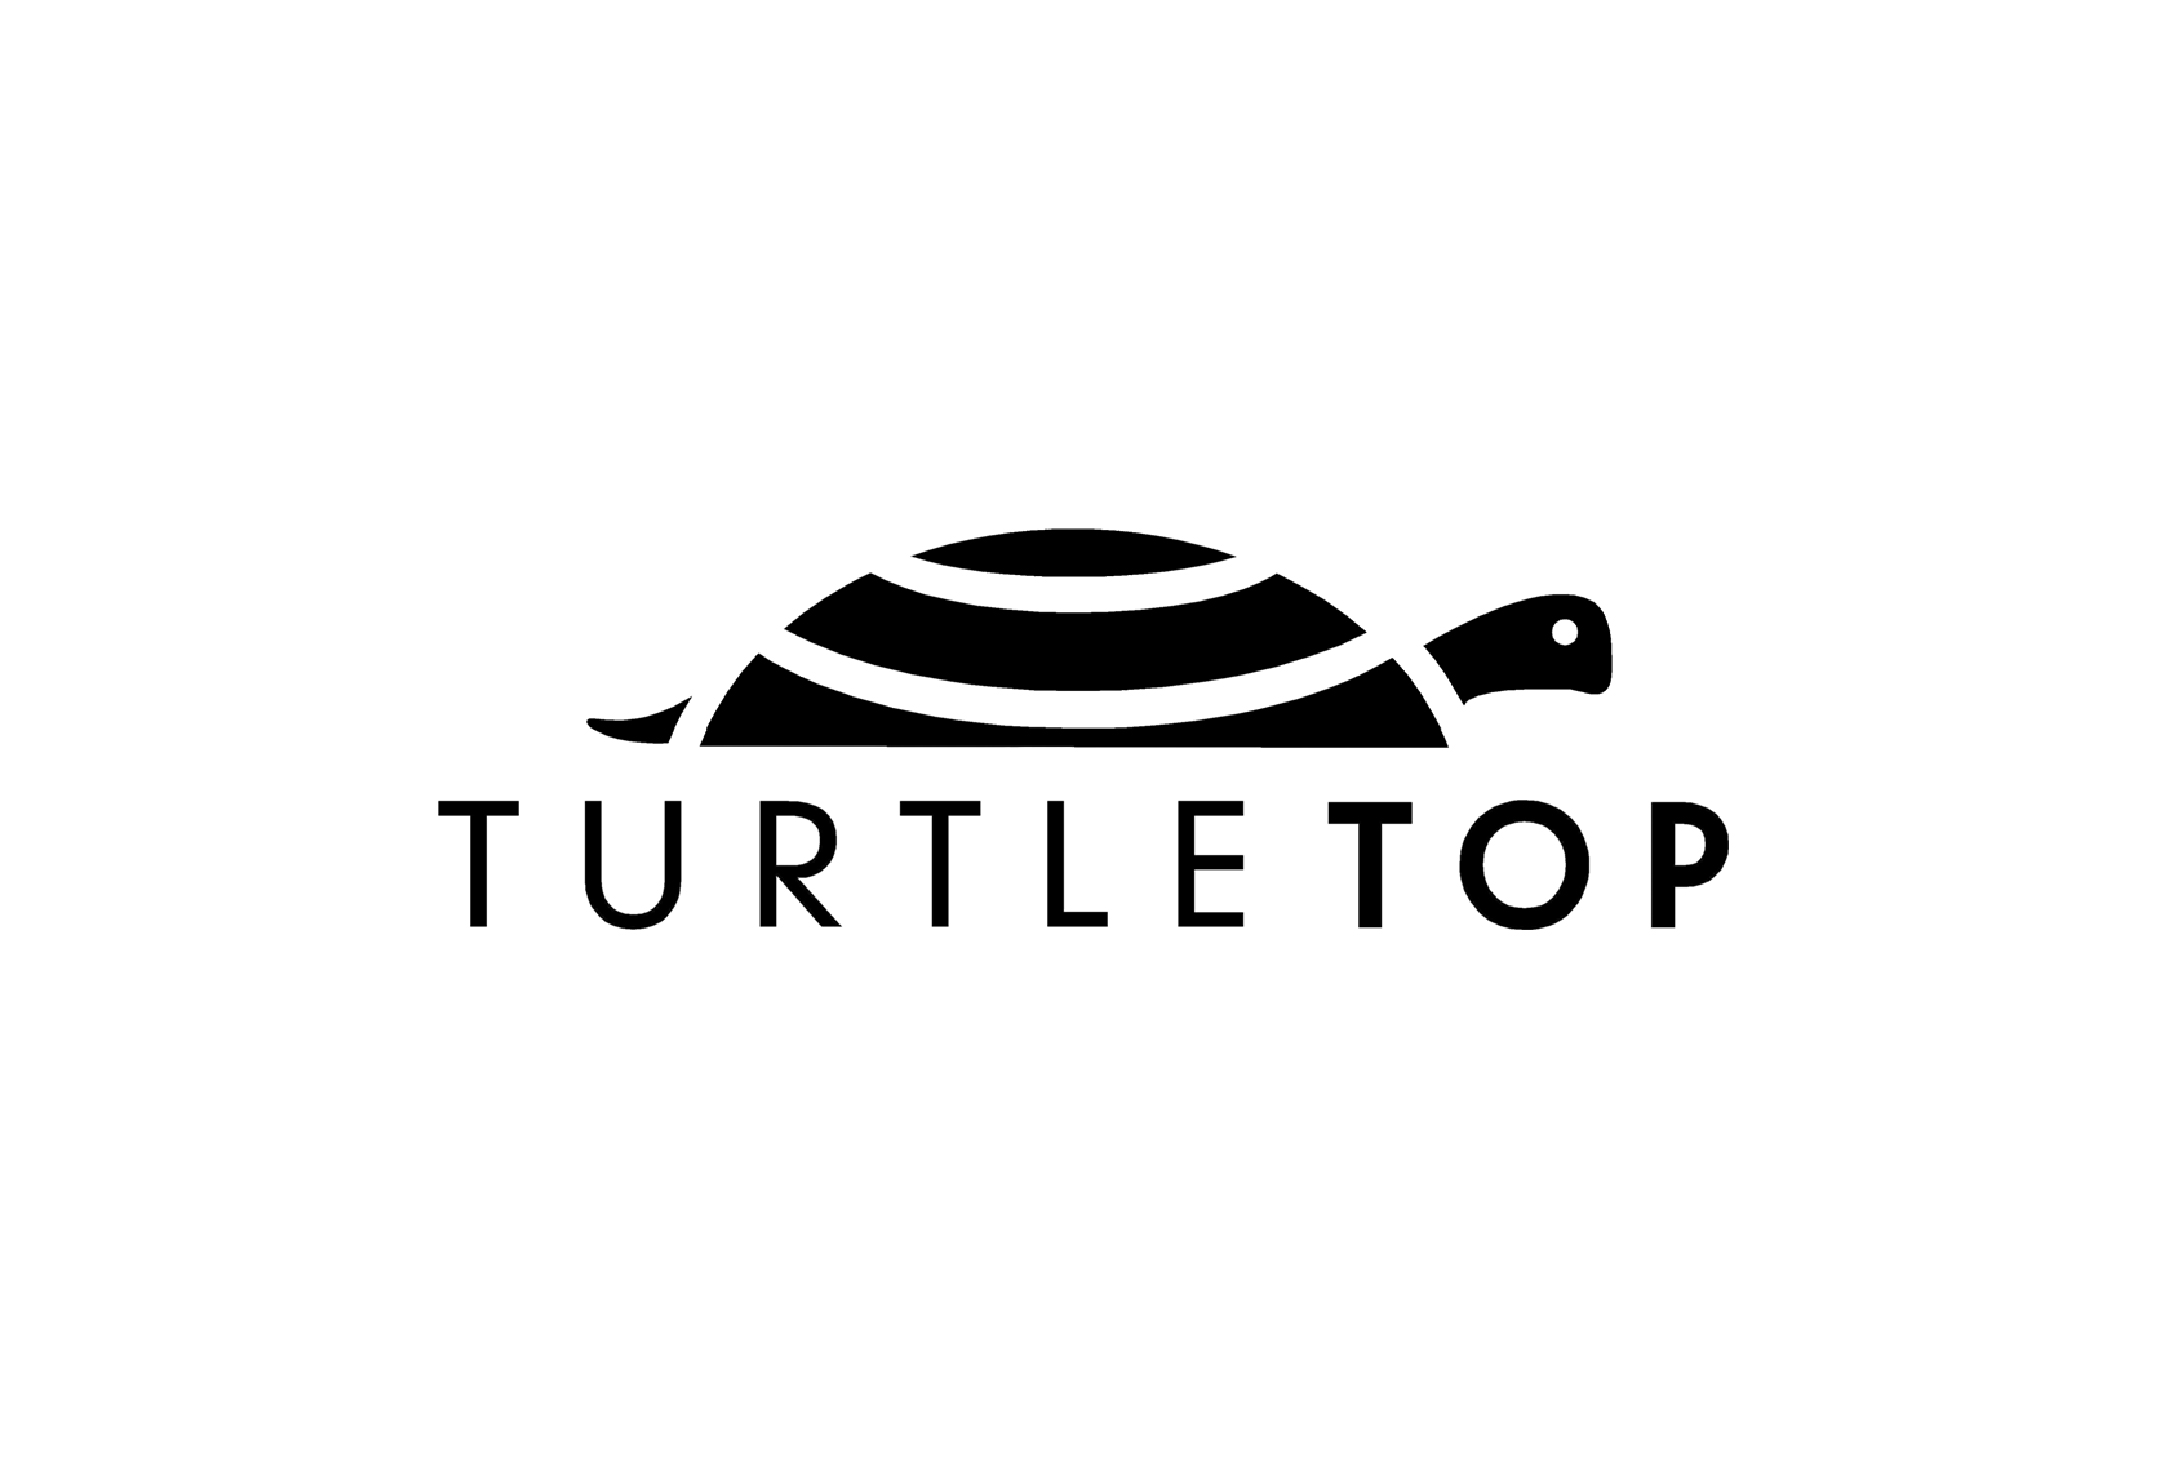 Turtle Top logo